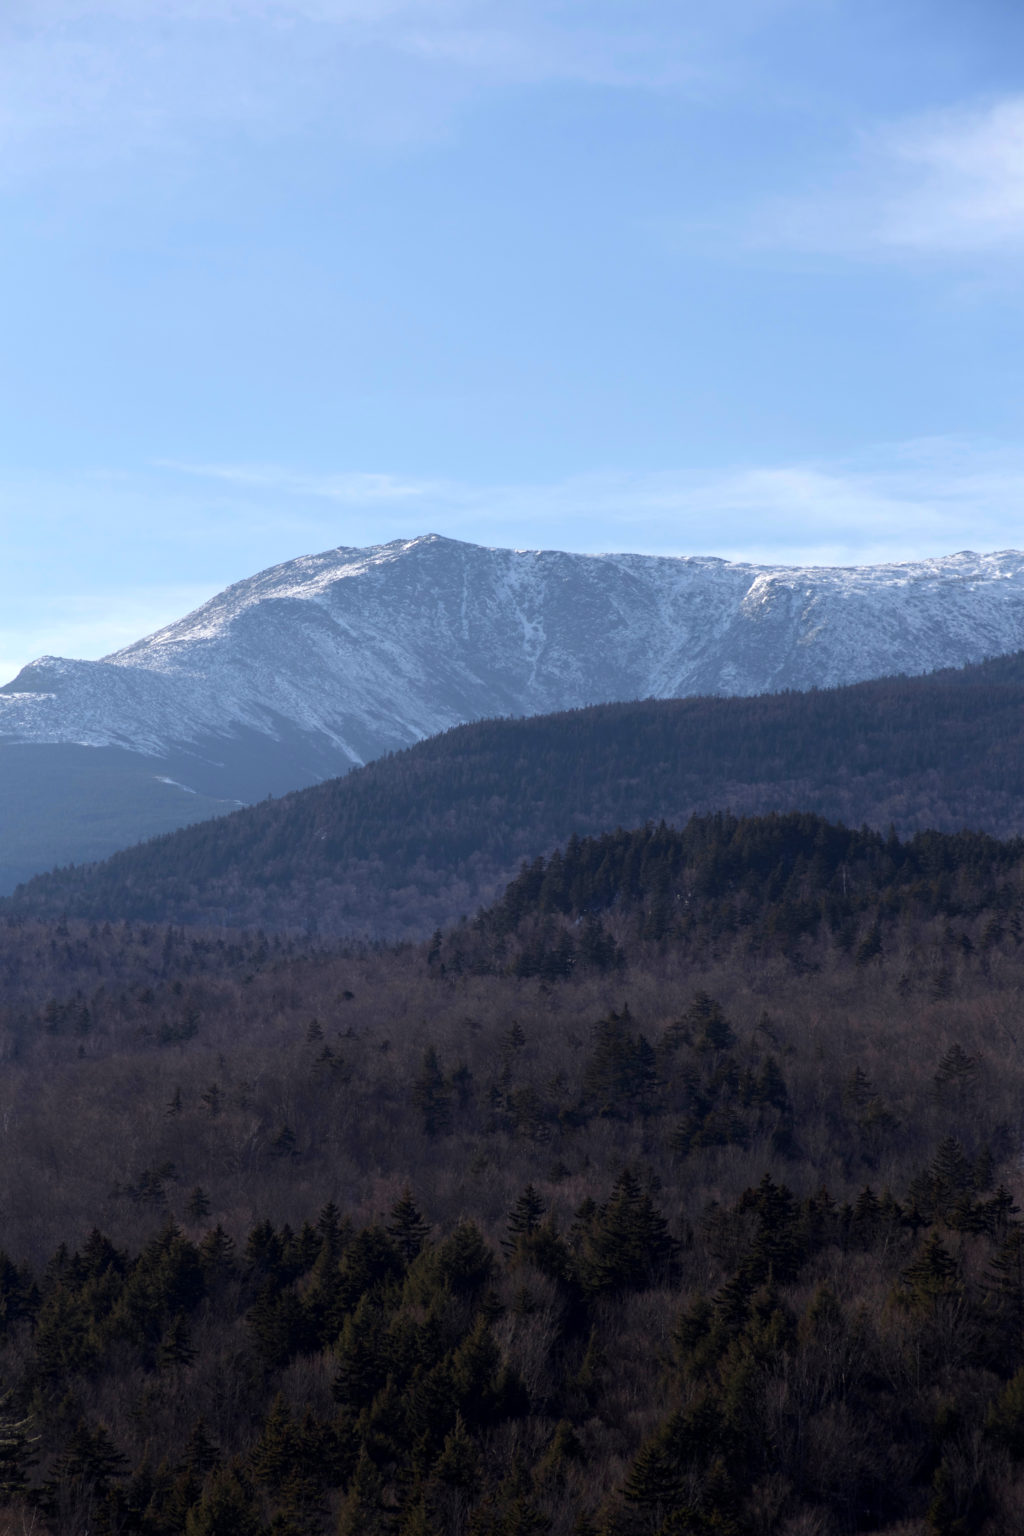 Snowy Mountain Ridge in the Distance